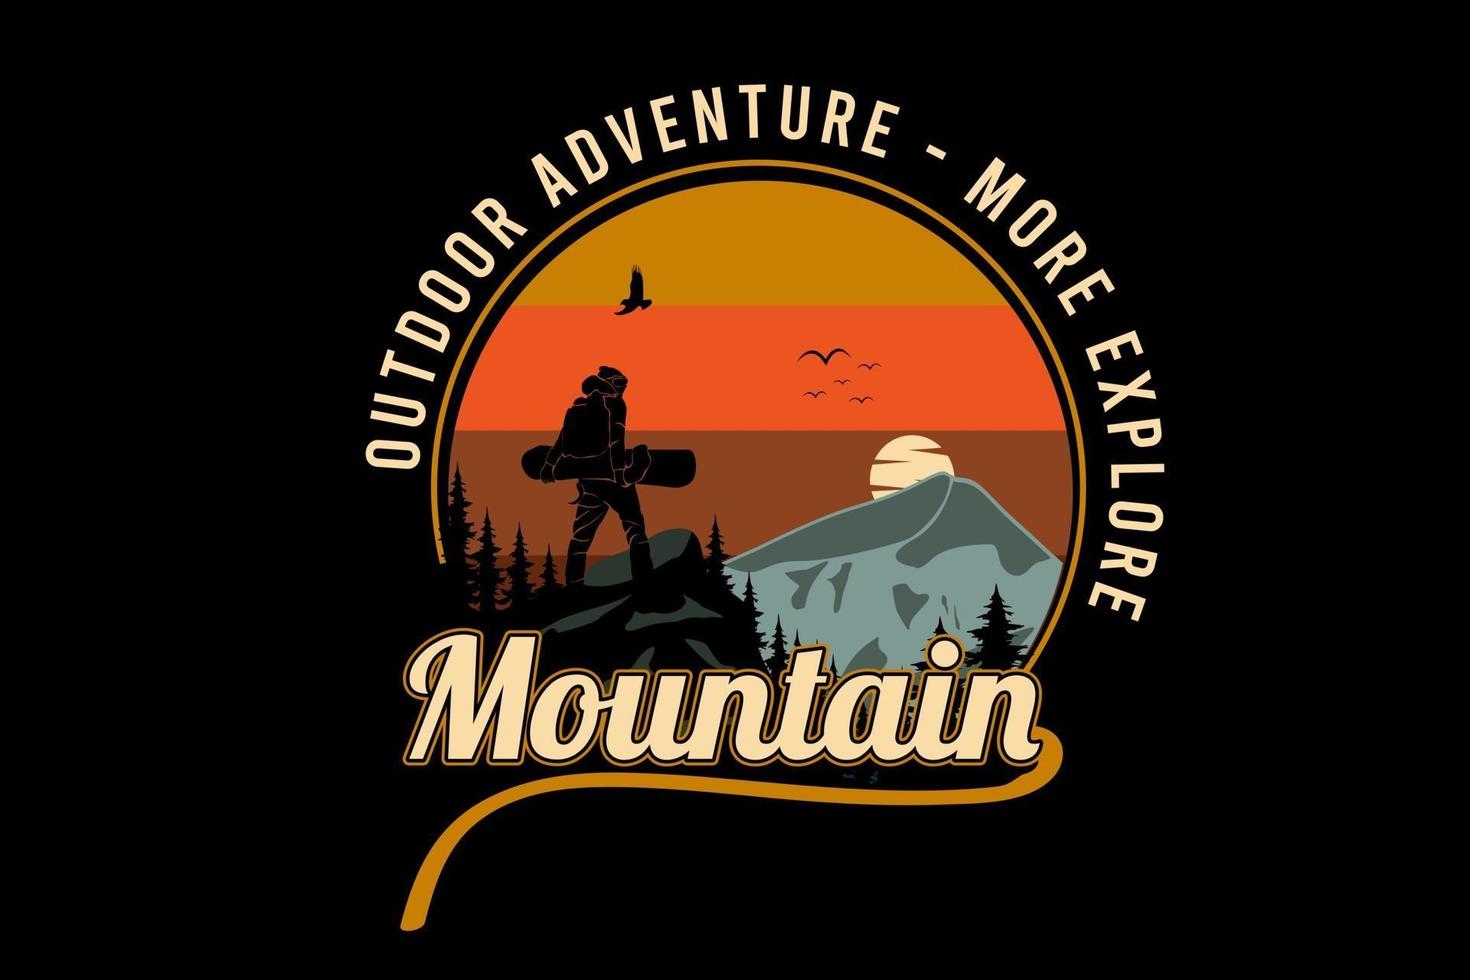 outdoor adventure more explore mountain color orange yellow and gray vector